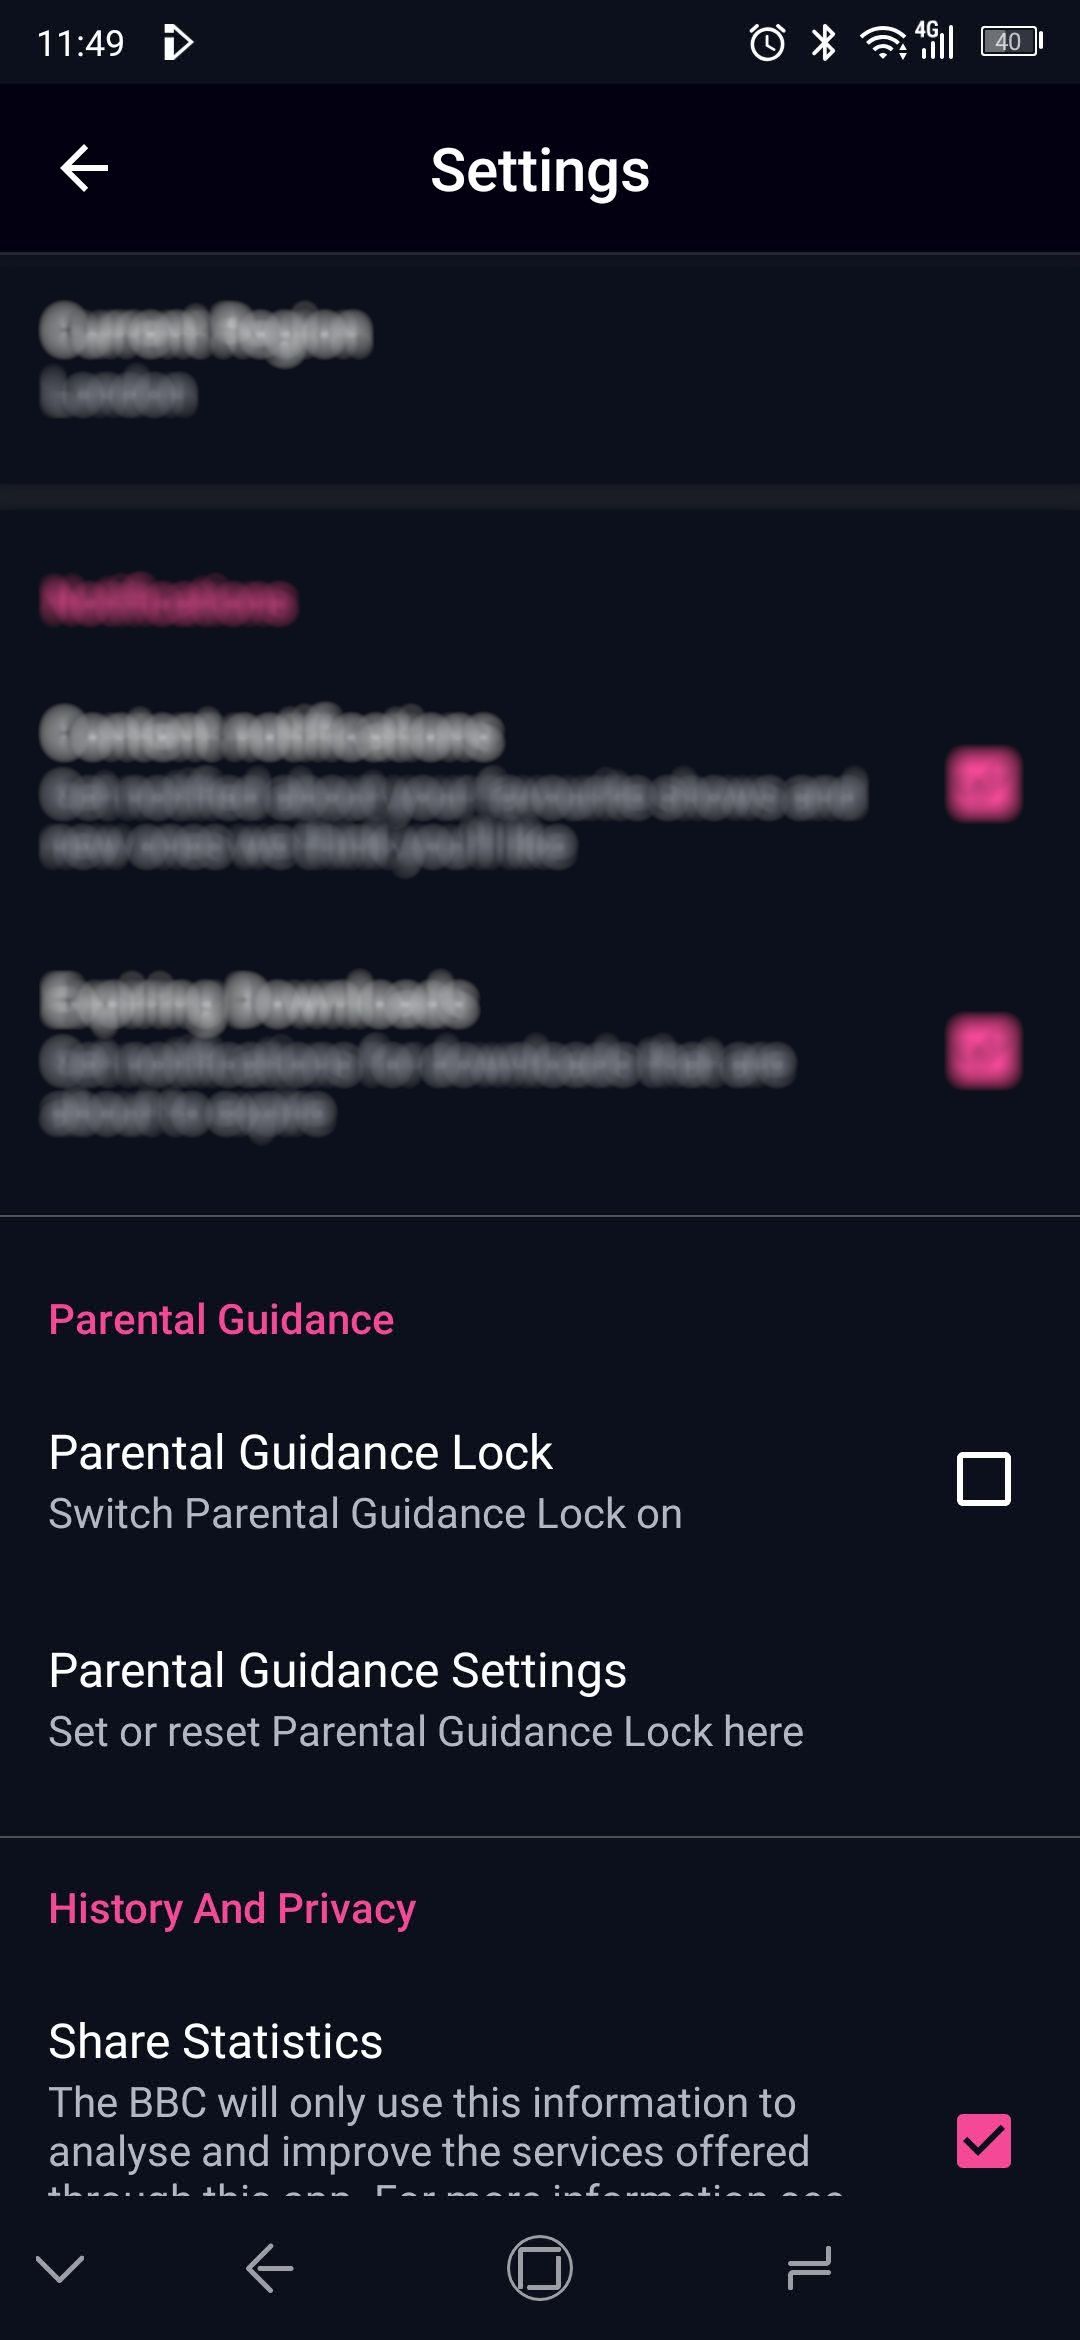 Toggle parental settings in iPlayer